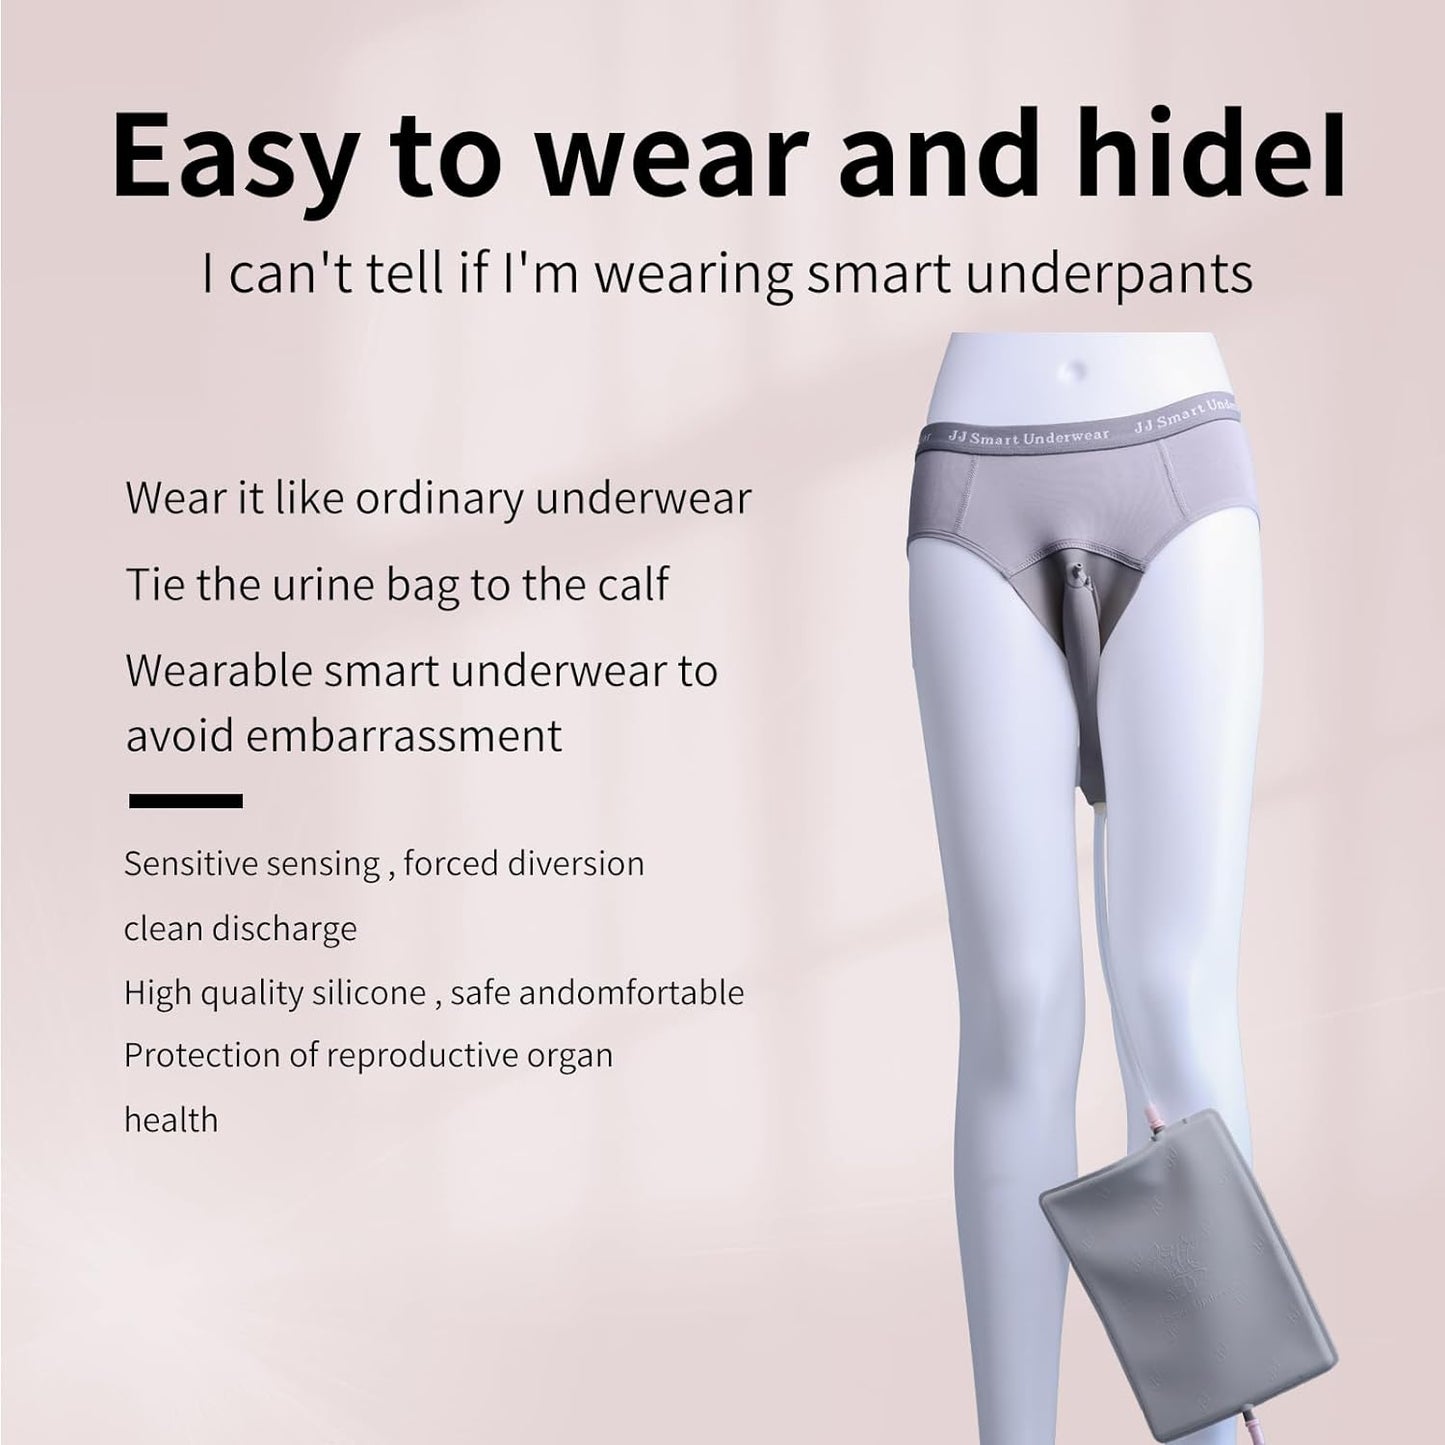 [JJ SMART] 🔥NEW🔥 Women's upright walking smart underwear, leak-proof convenience pants, medical silicone cotton underwear, reusable